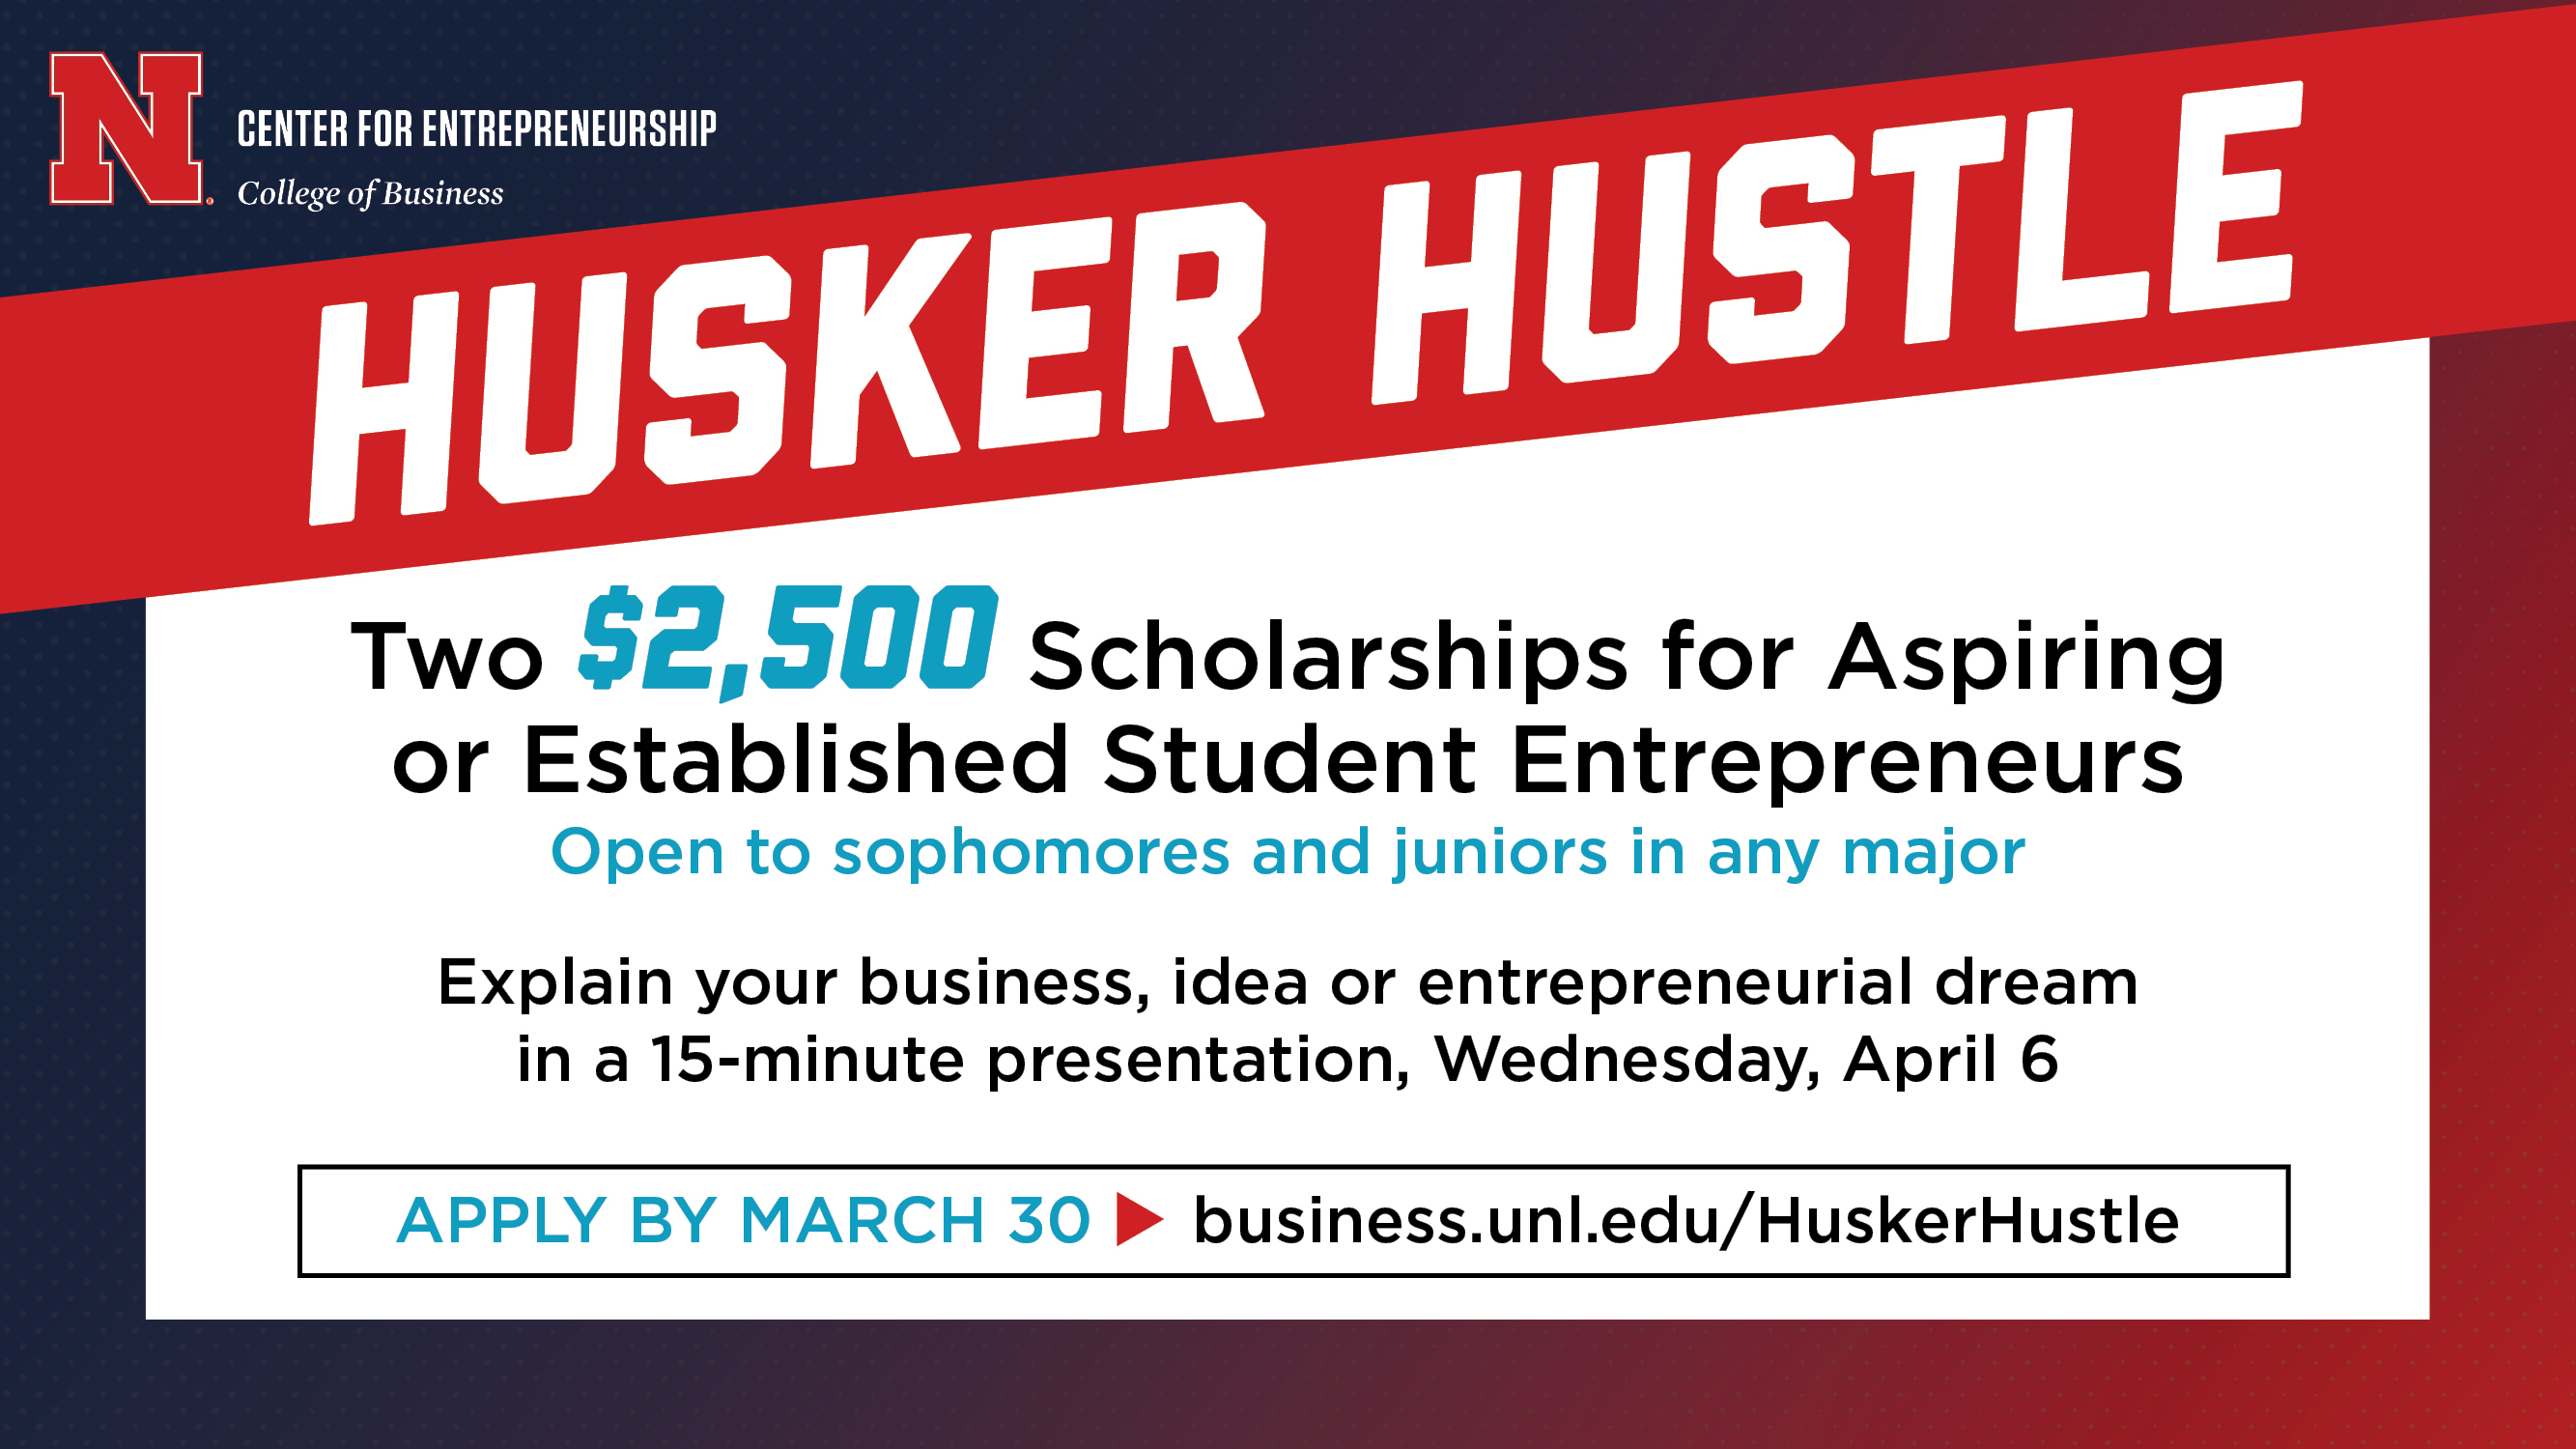 Compete for one of two $2,500 scholarships for aspiring or established student entrepreneurs in the Husker Hustle.